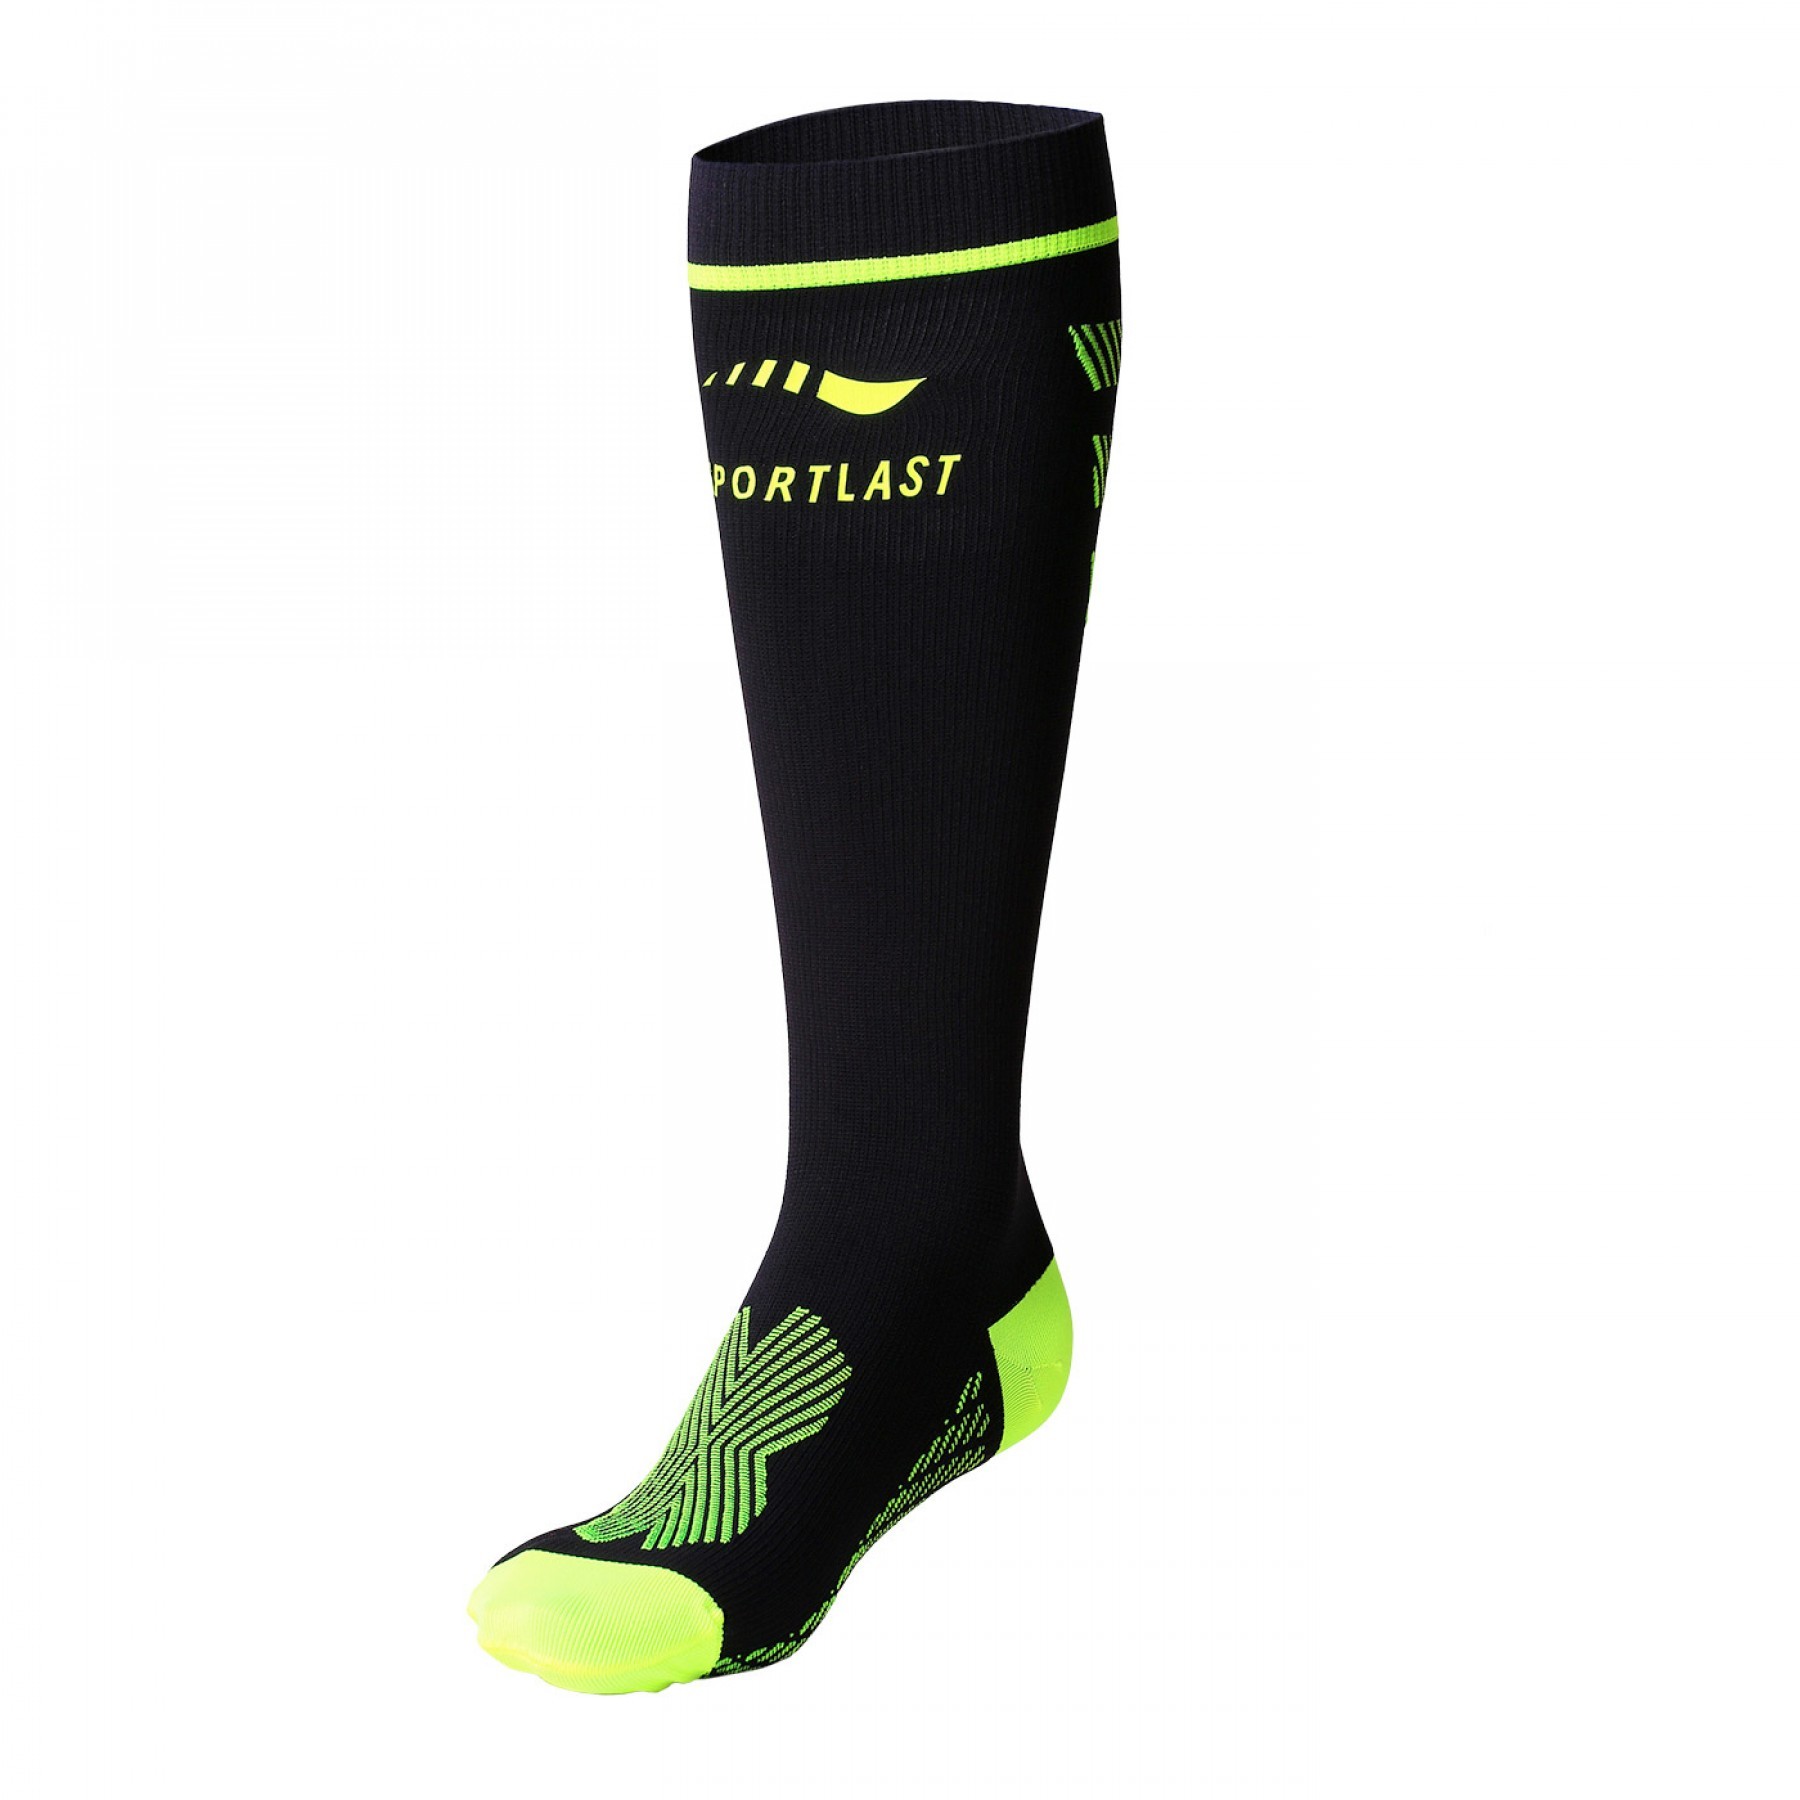 Calcetines Compressport Pro Racing socks RUN - Deportes Manzanedo